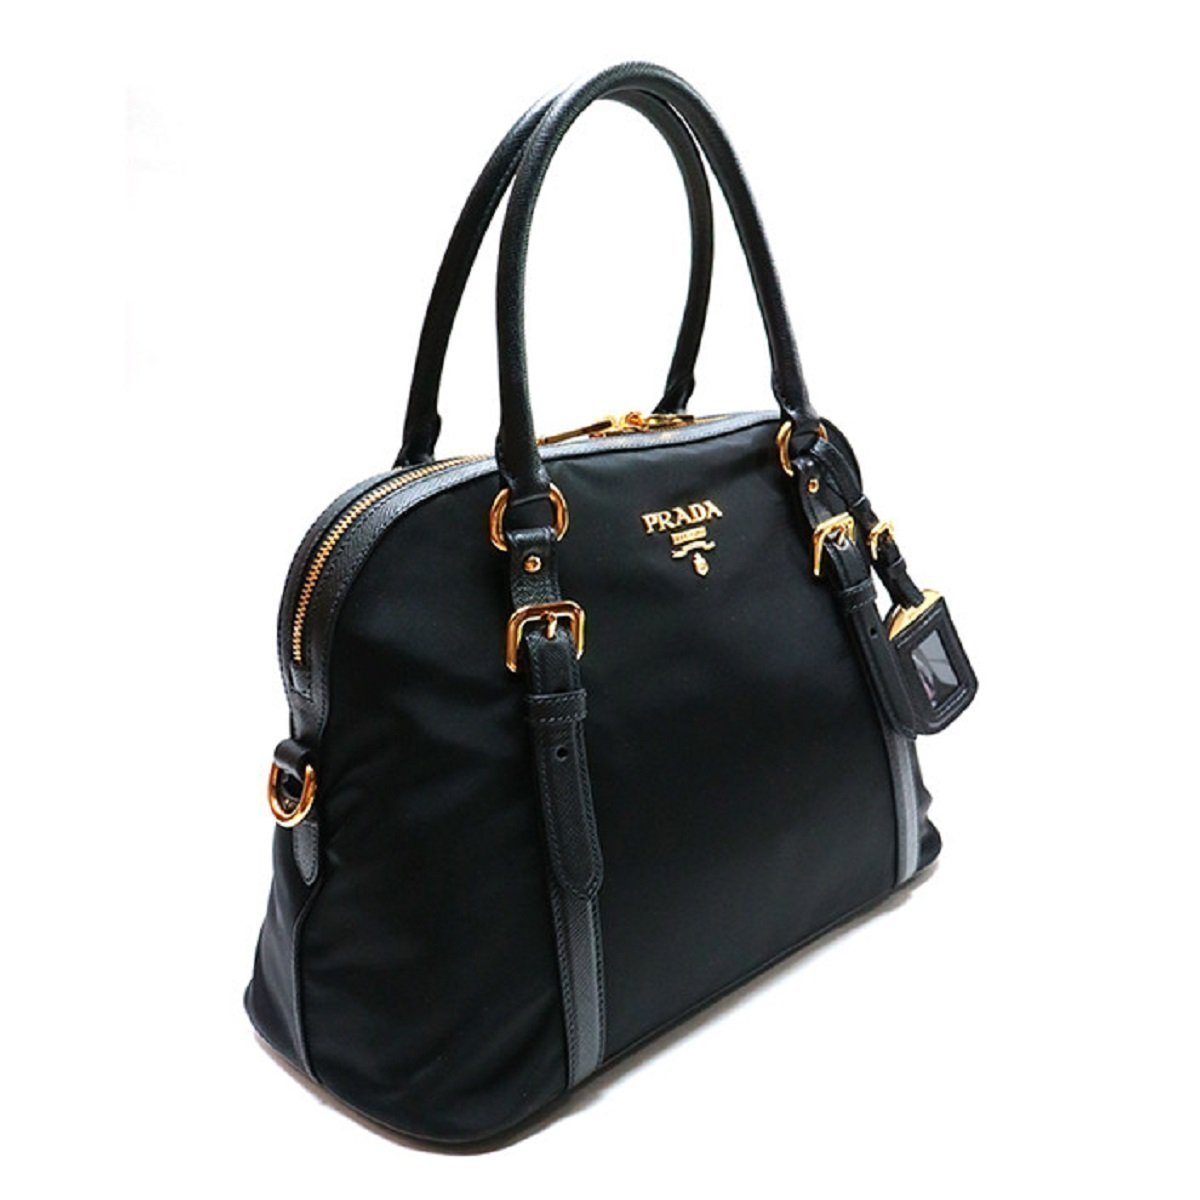 Prada Tessuto Nylon Saffiano Leather Black Satchel Bag